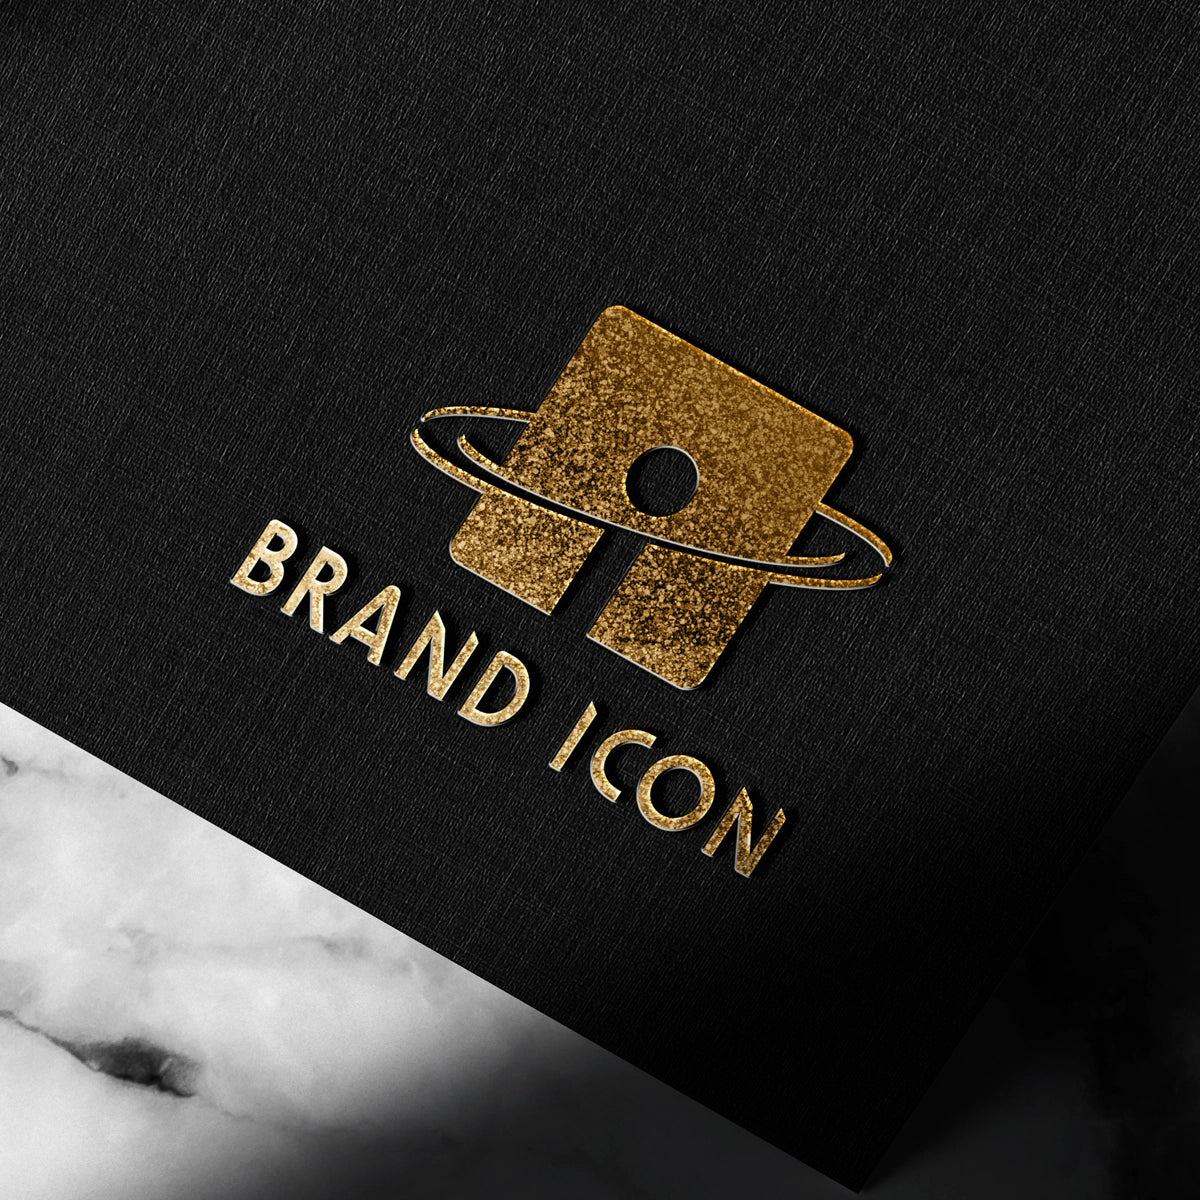 brandicon.org